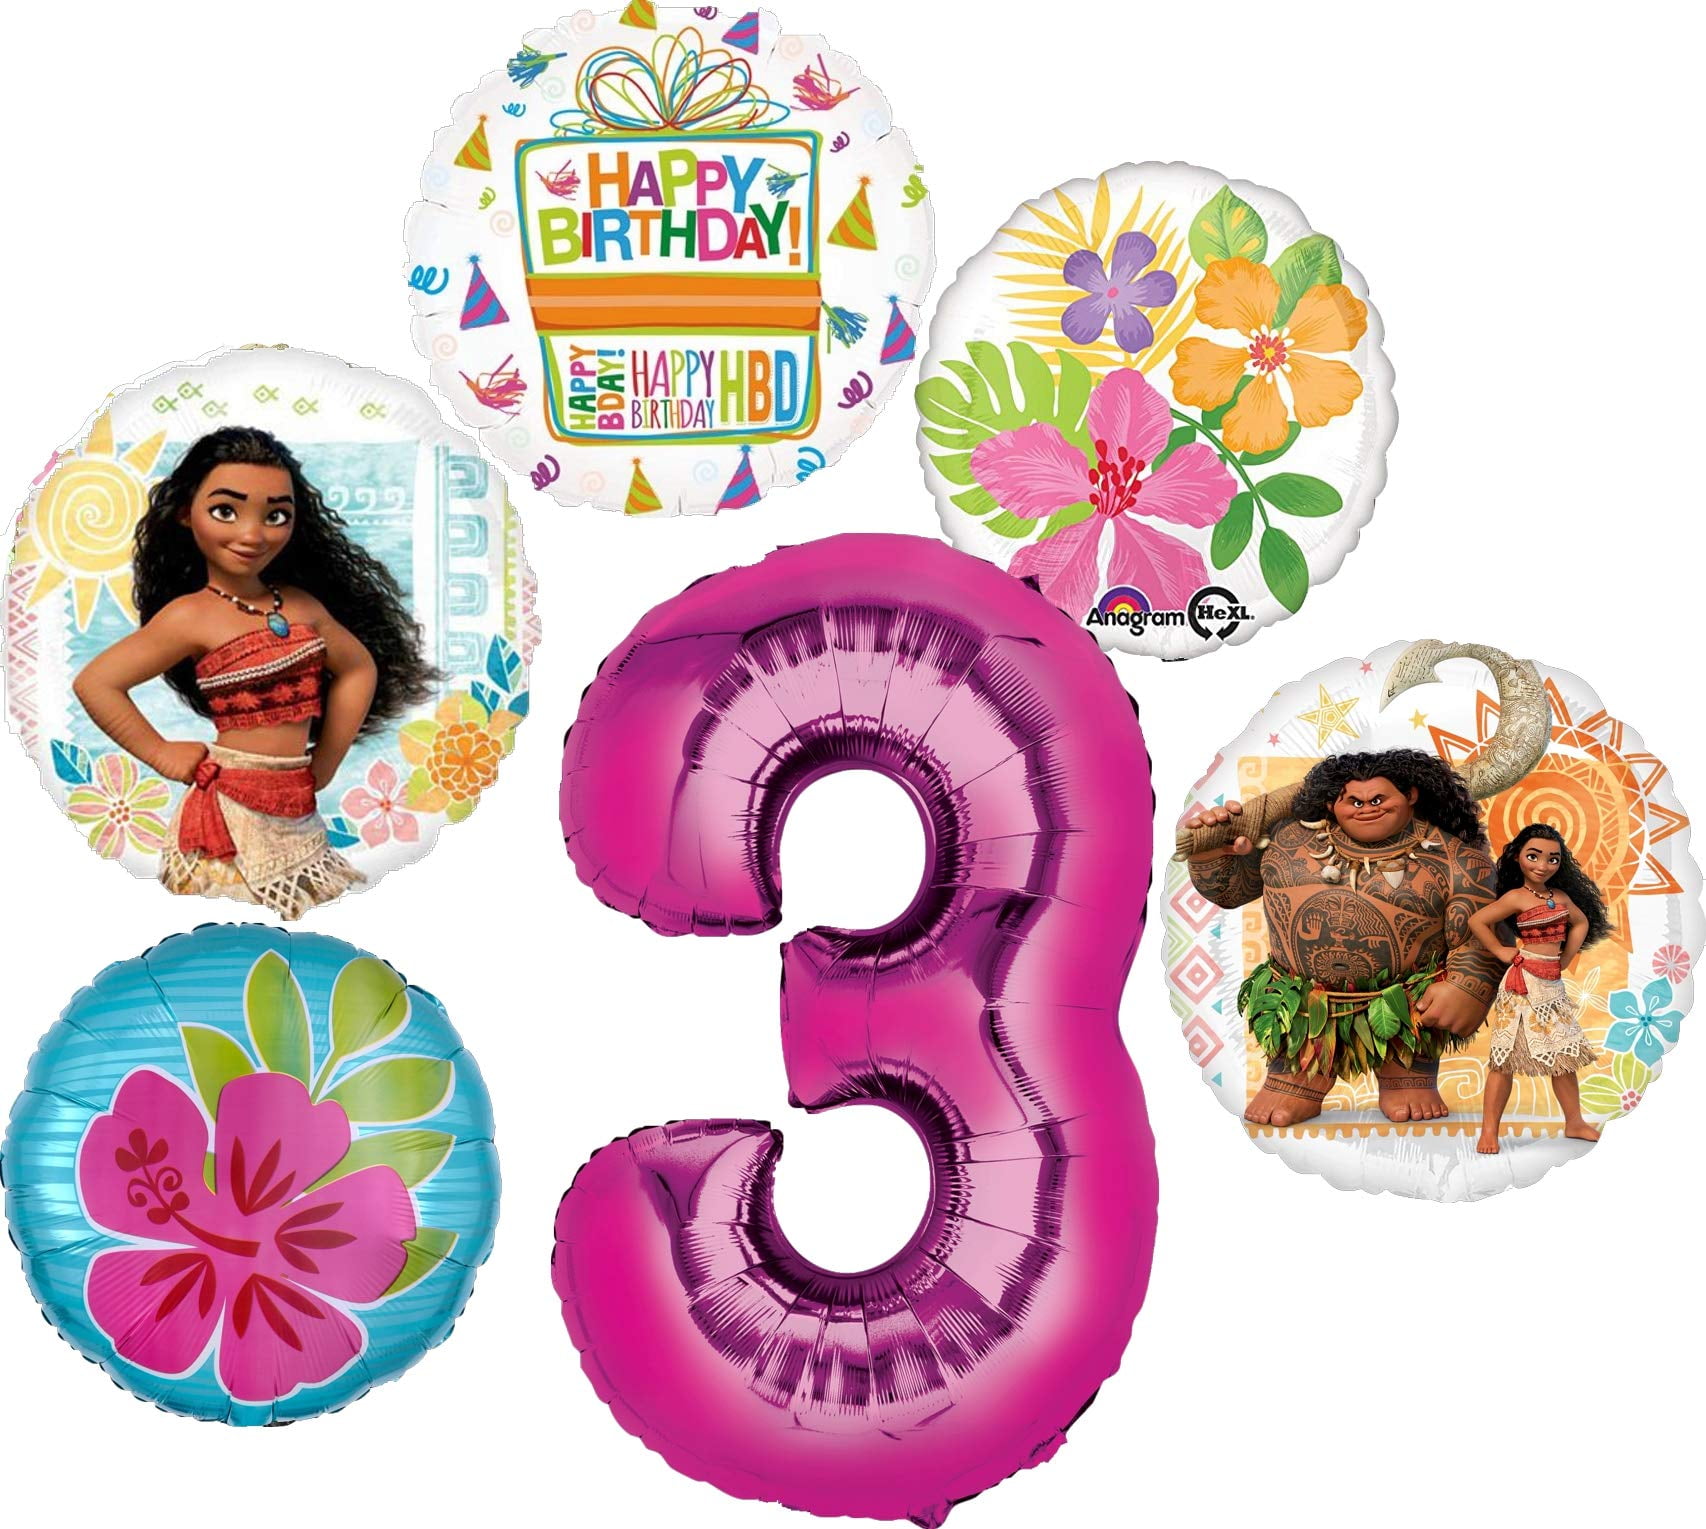 Disney Princess Party Supplies 3rd Birthday Balloon Bouquet Decorations  with 8 Princesses - Walmart.com